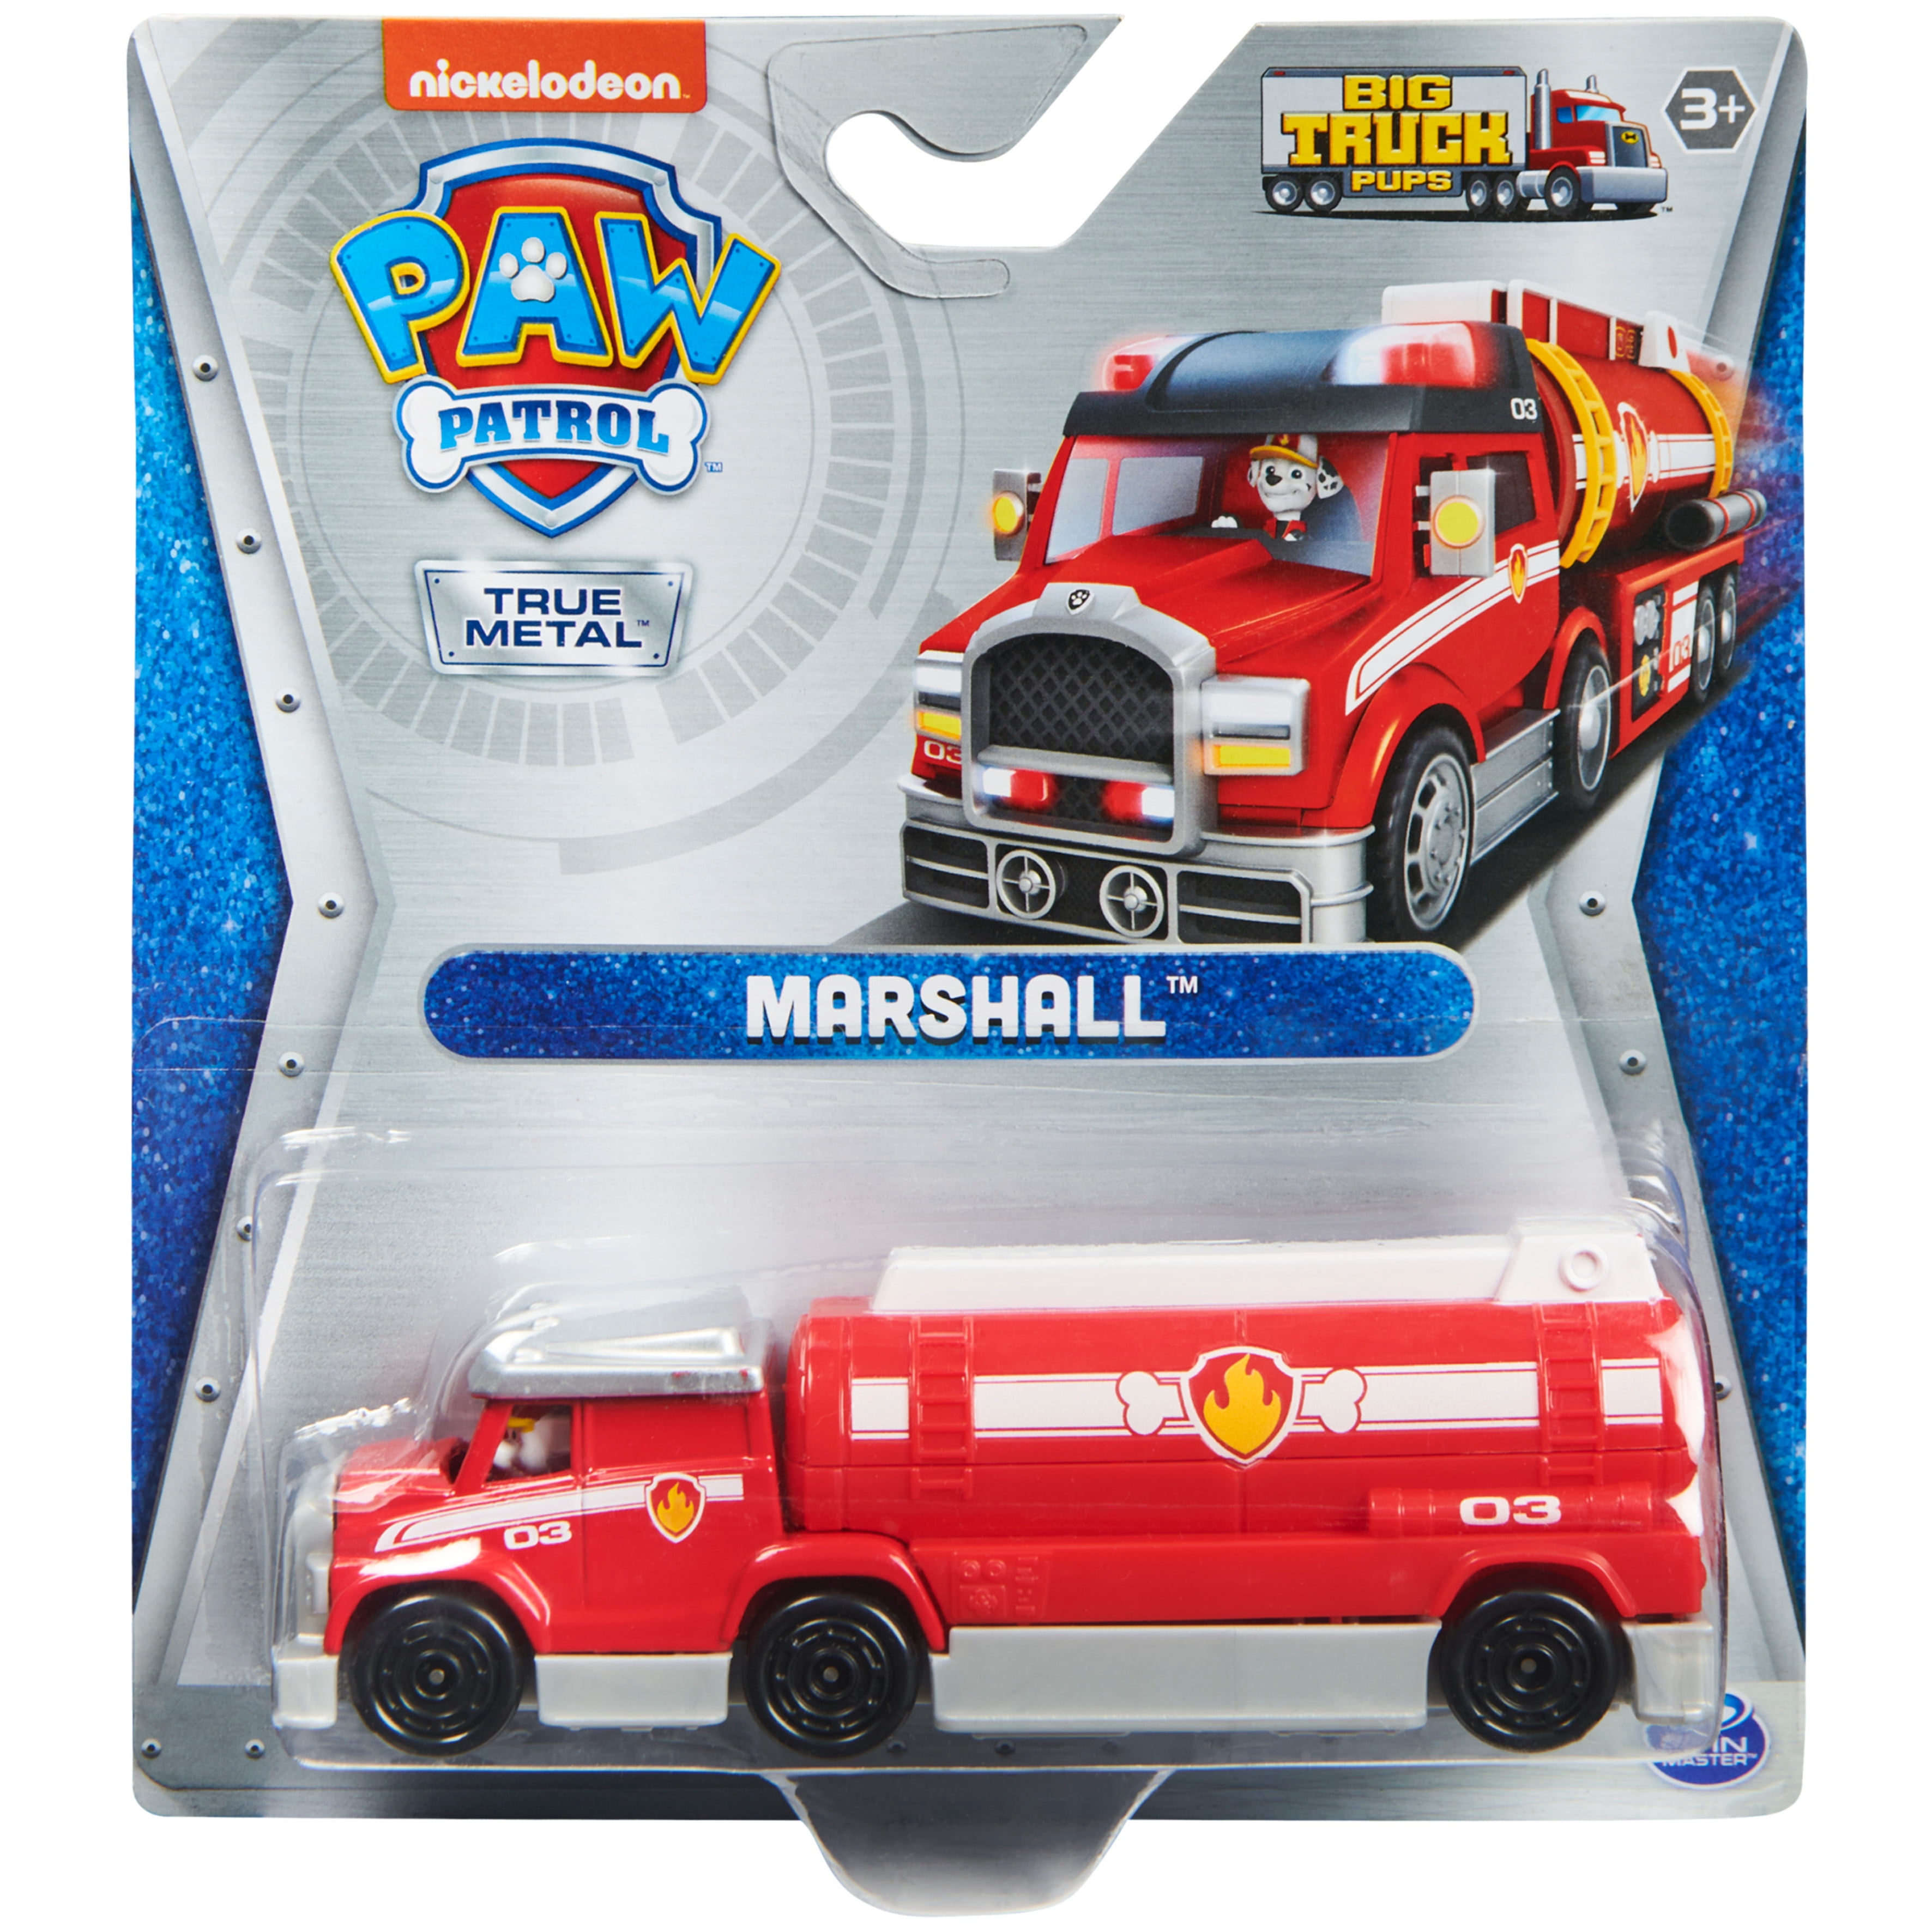 Buy Paw Patrol True Metal Marshall Collectible Die Cast Toy Trucks